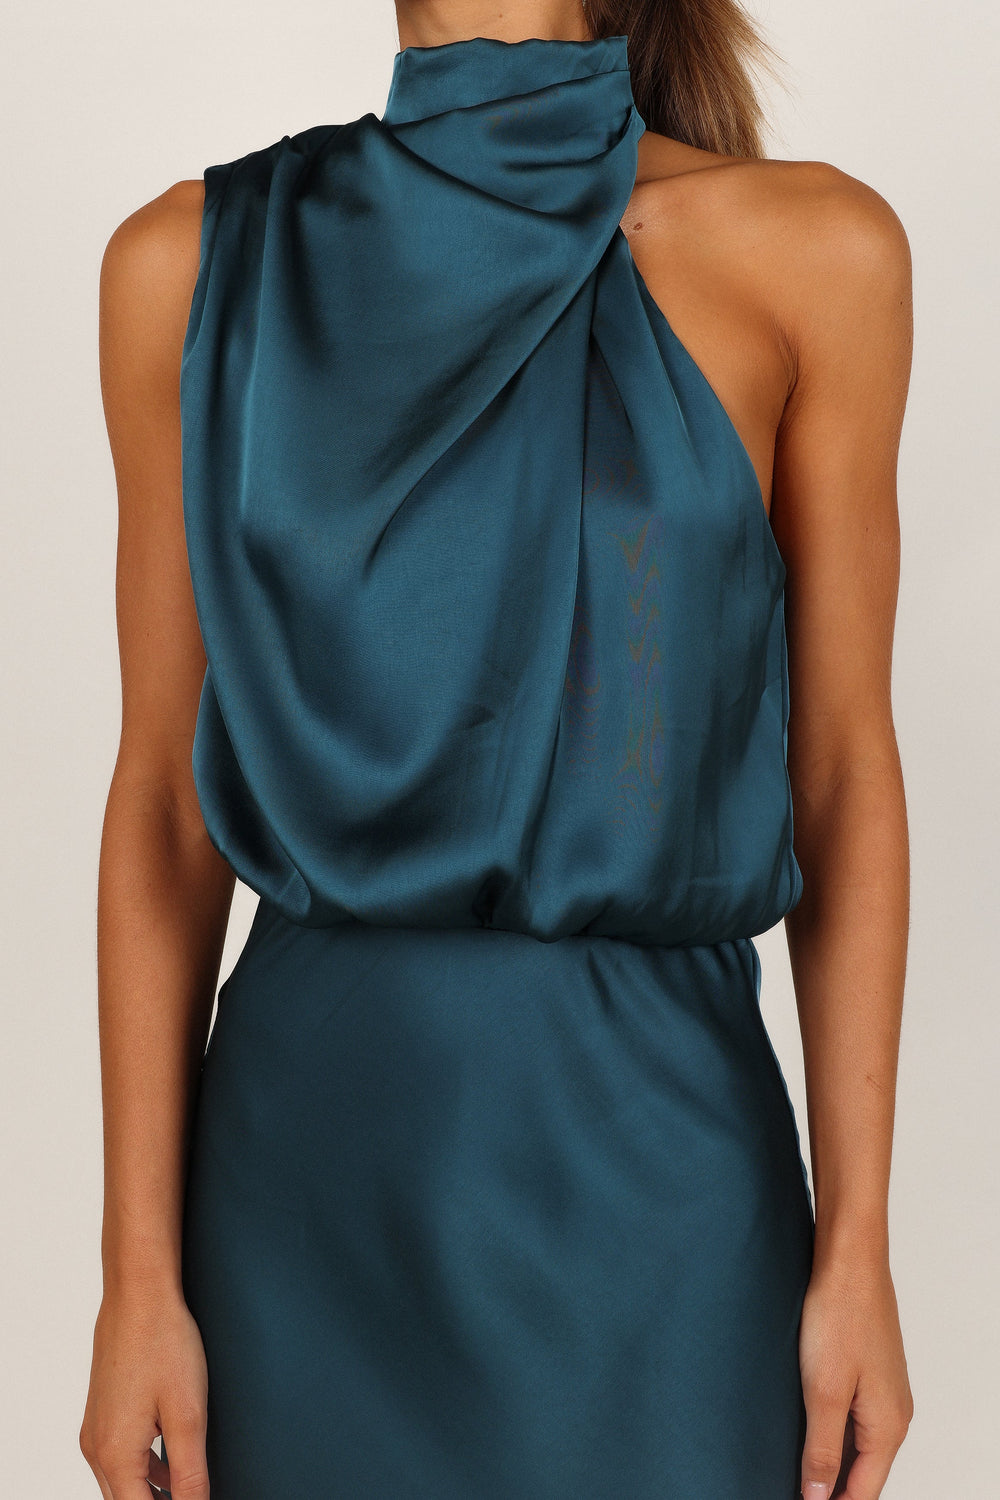 Shop Formal Dress - Anabelle Halter Neck Midi Dress - Teal secondary image